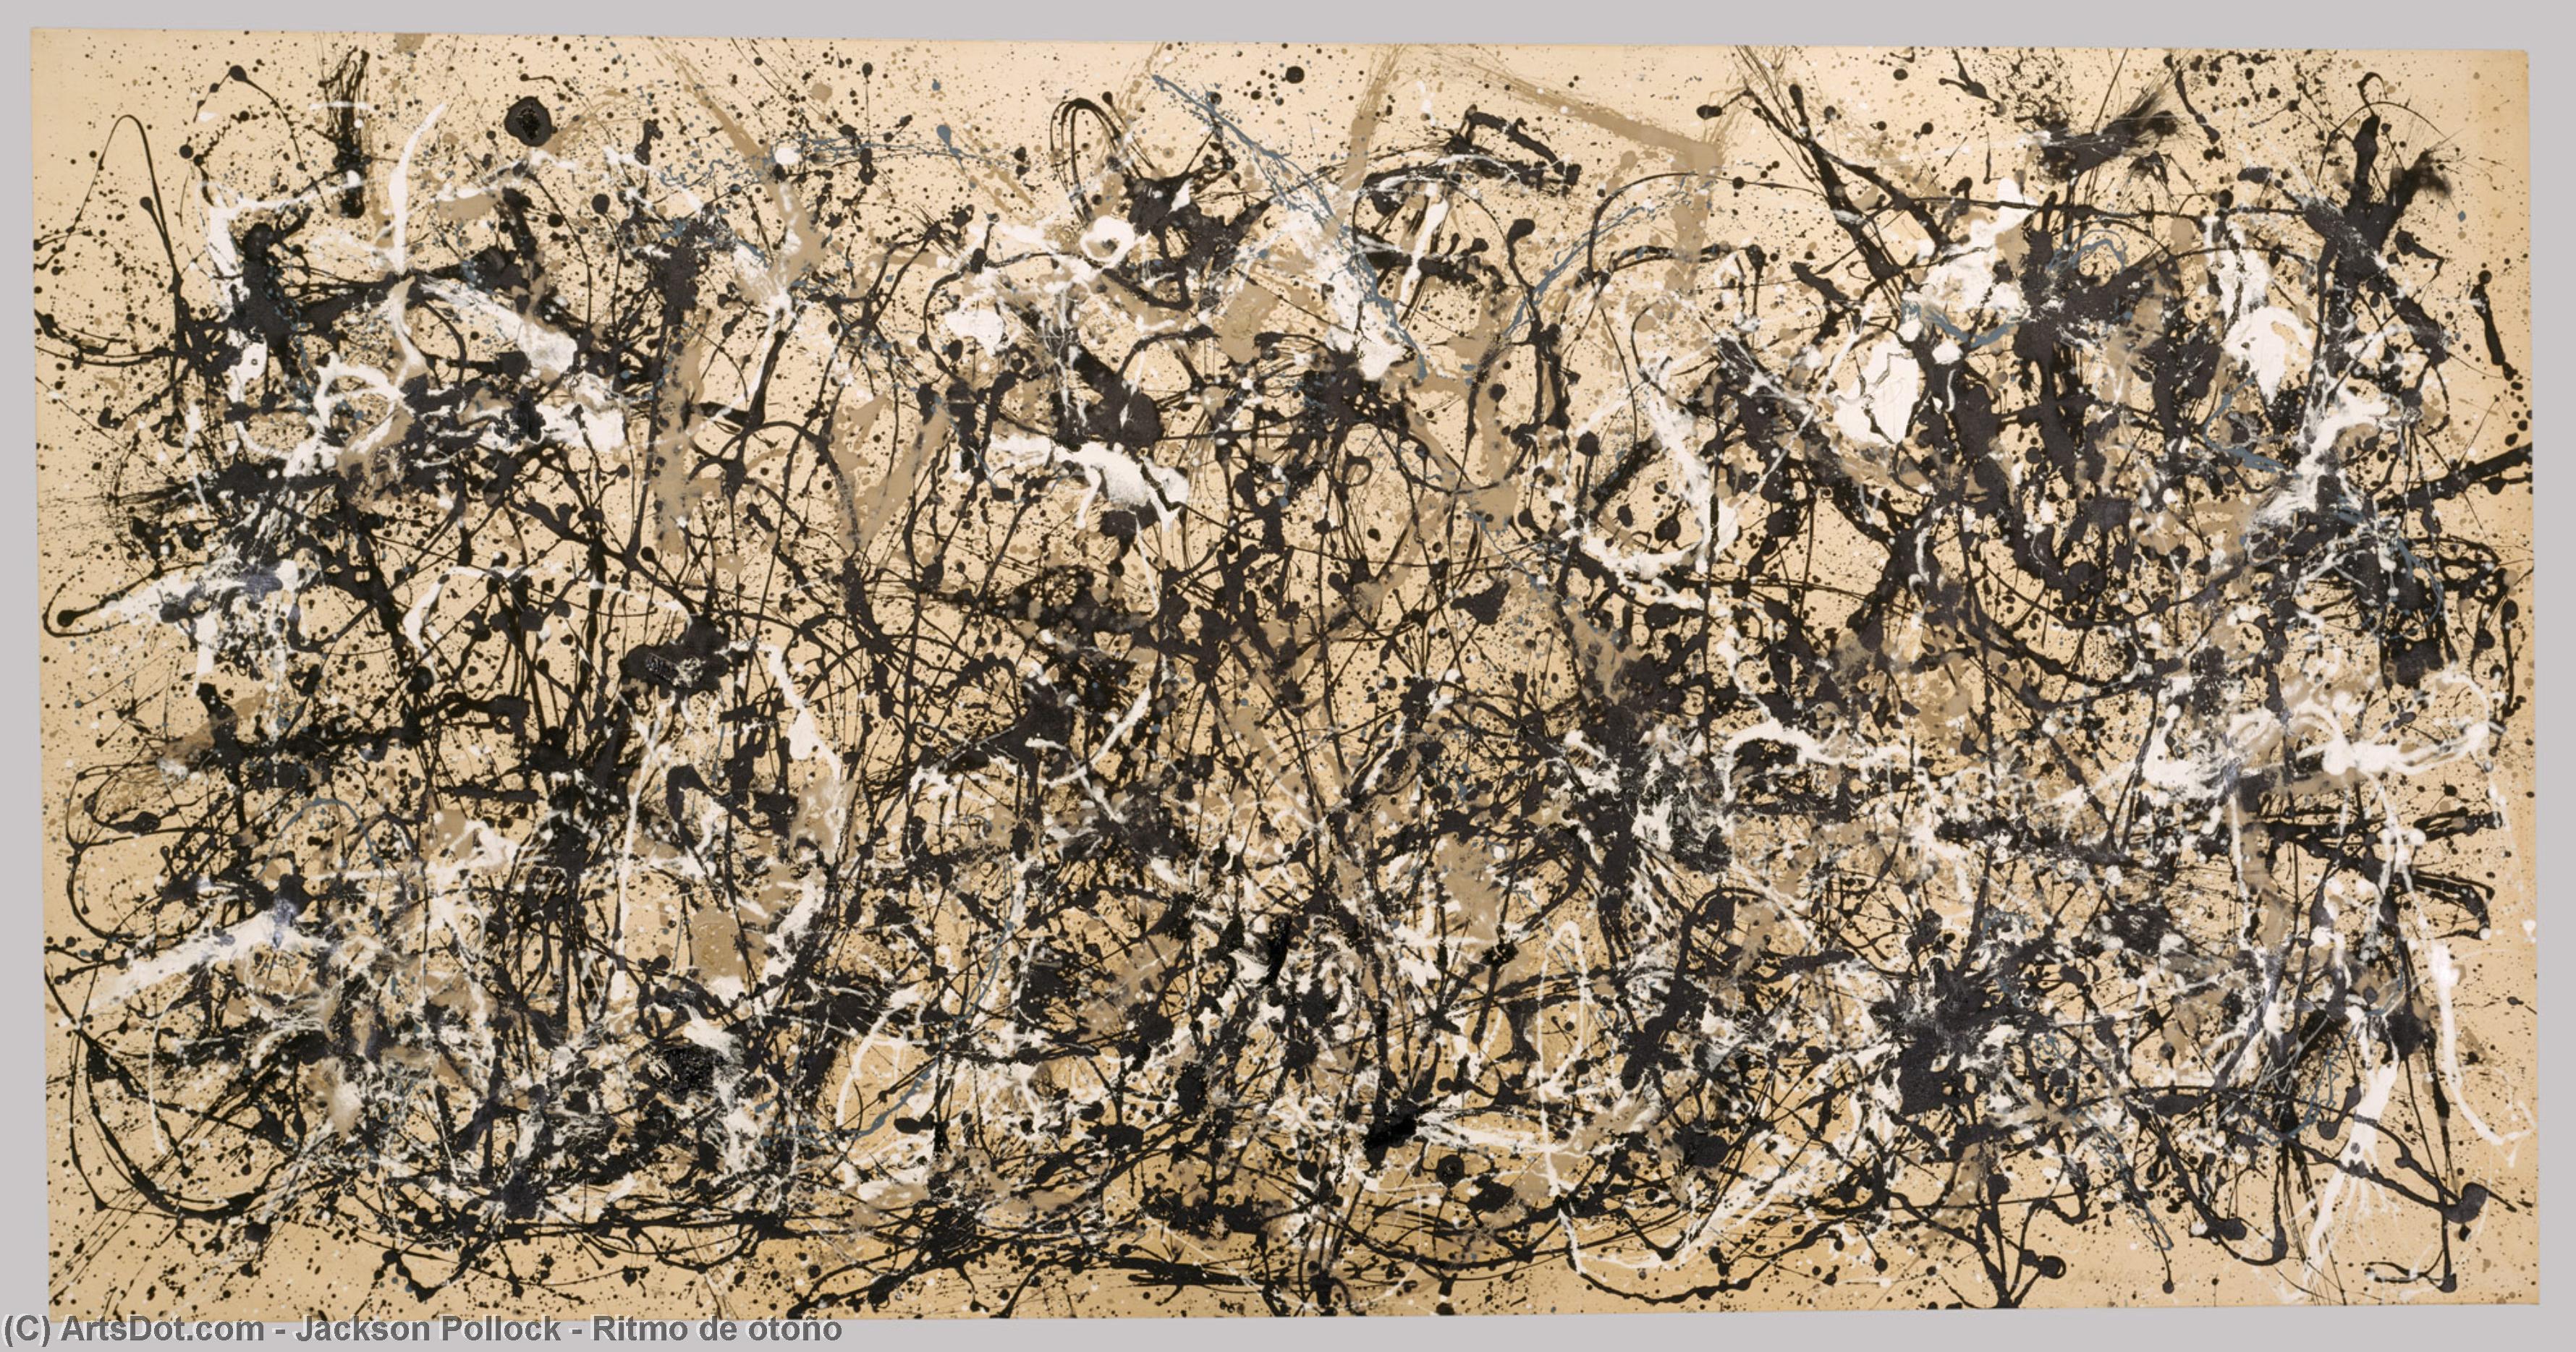 Wikoo.org - موسوعة الفنون الجميلة - اللوحة، العمل الفني Jackson Pollock - Ritmo de otoño